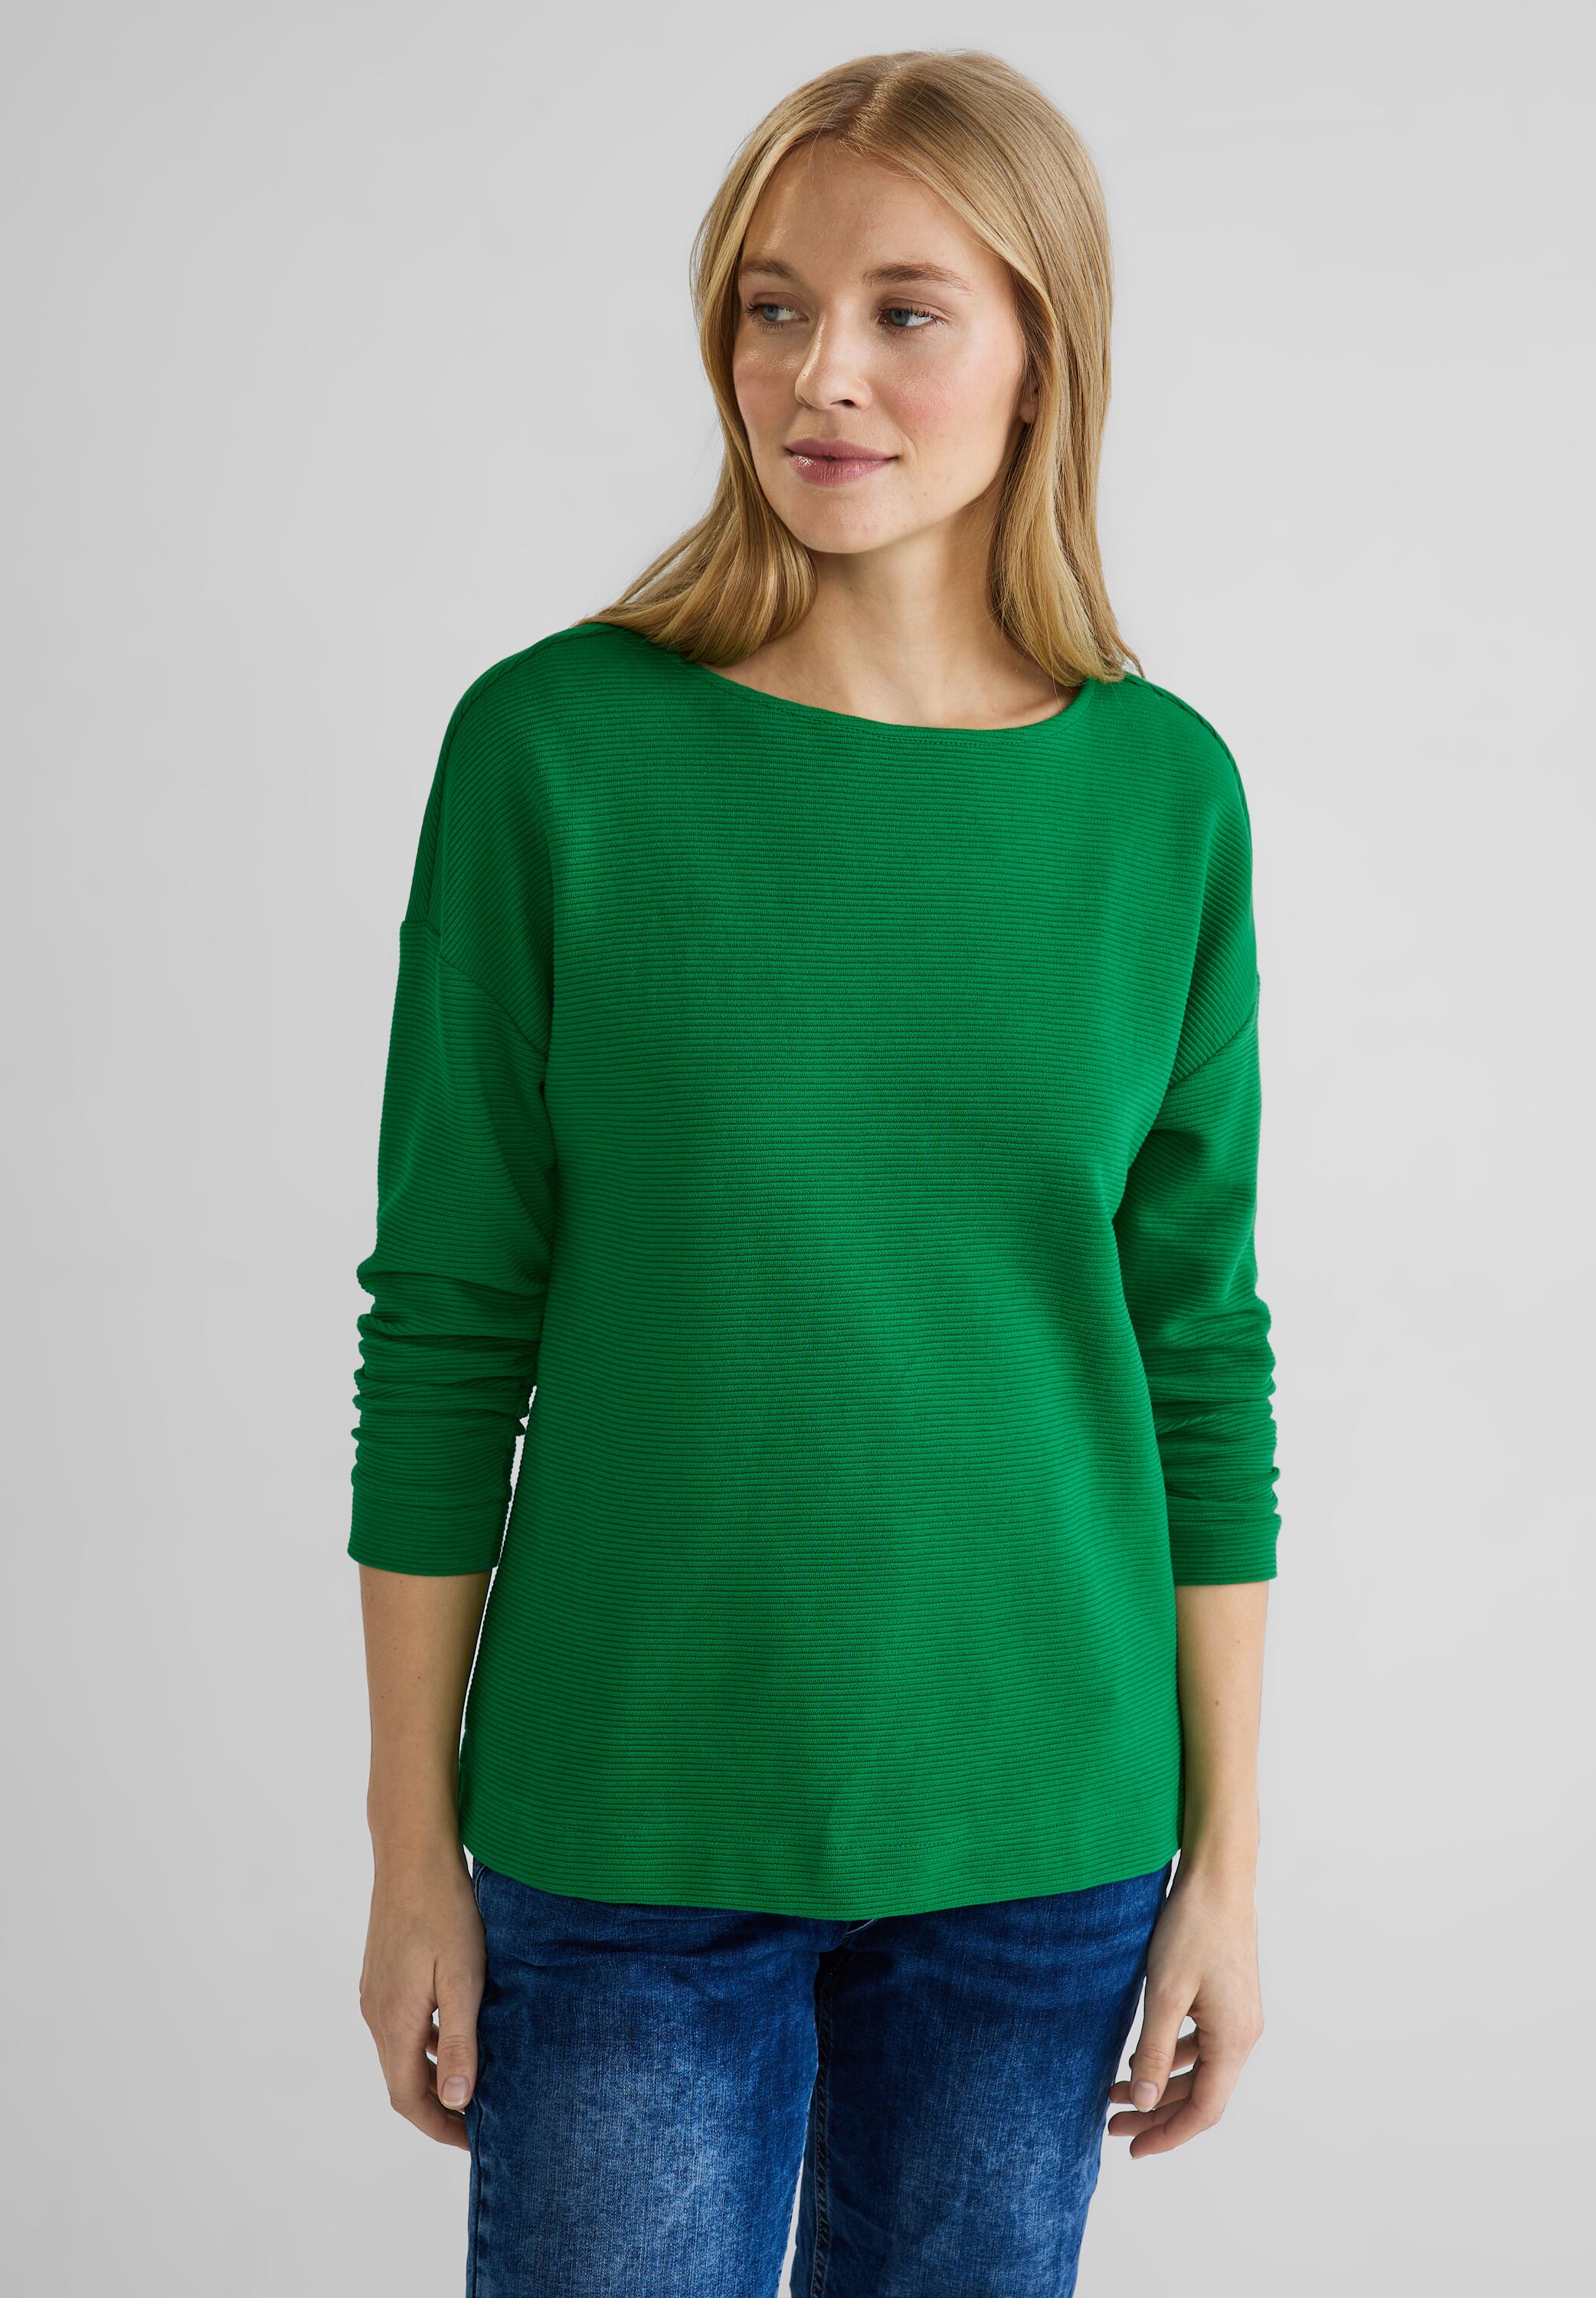 Street One Shirt in Brisk Green im SALE reduziert A319131-14649 - CONCEPT  Mode